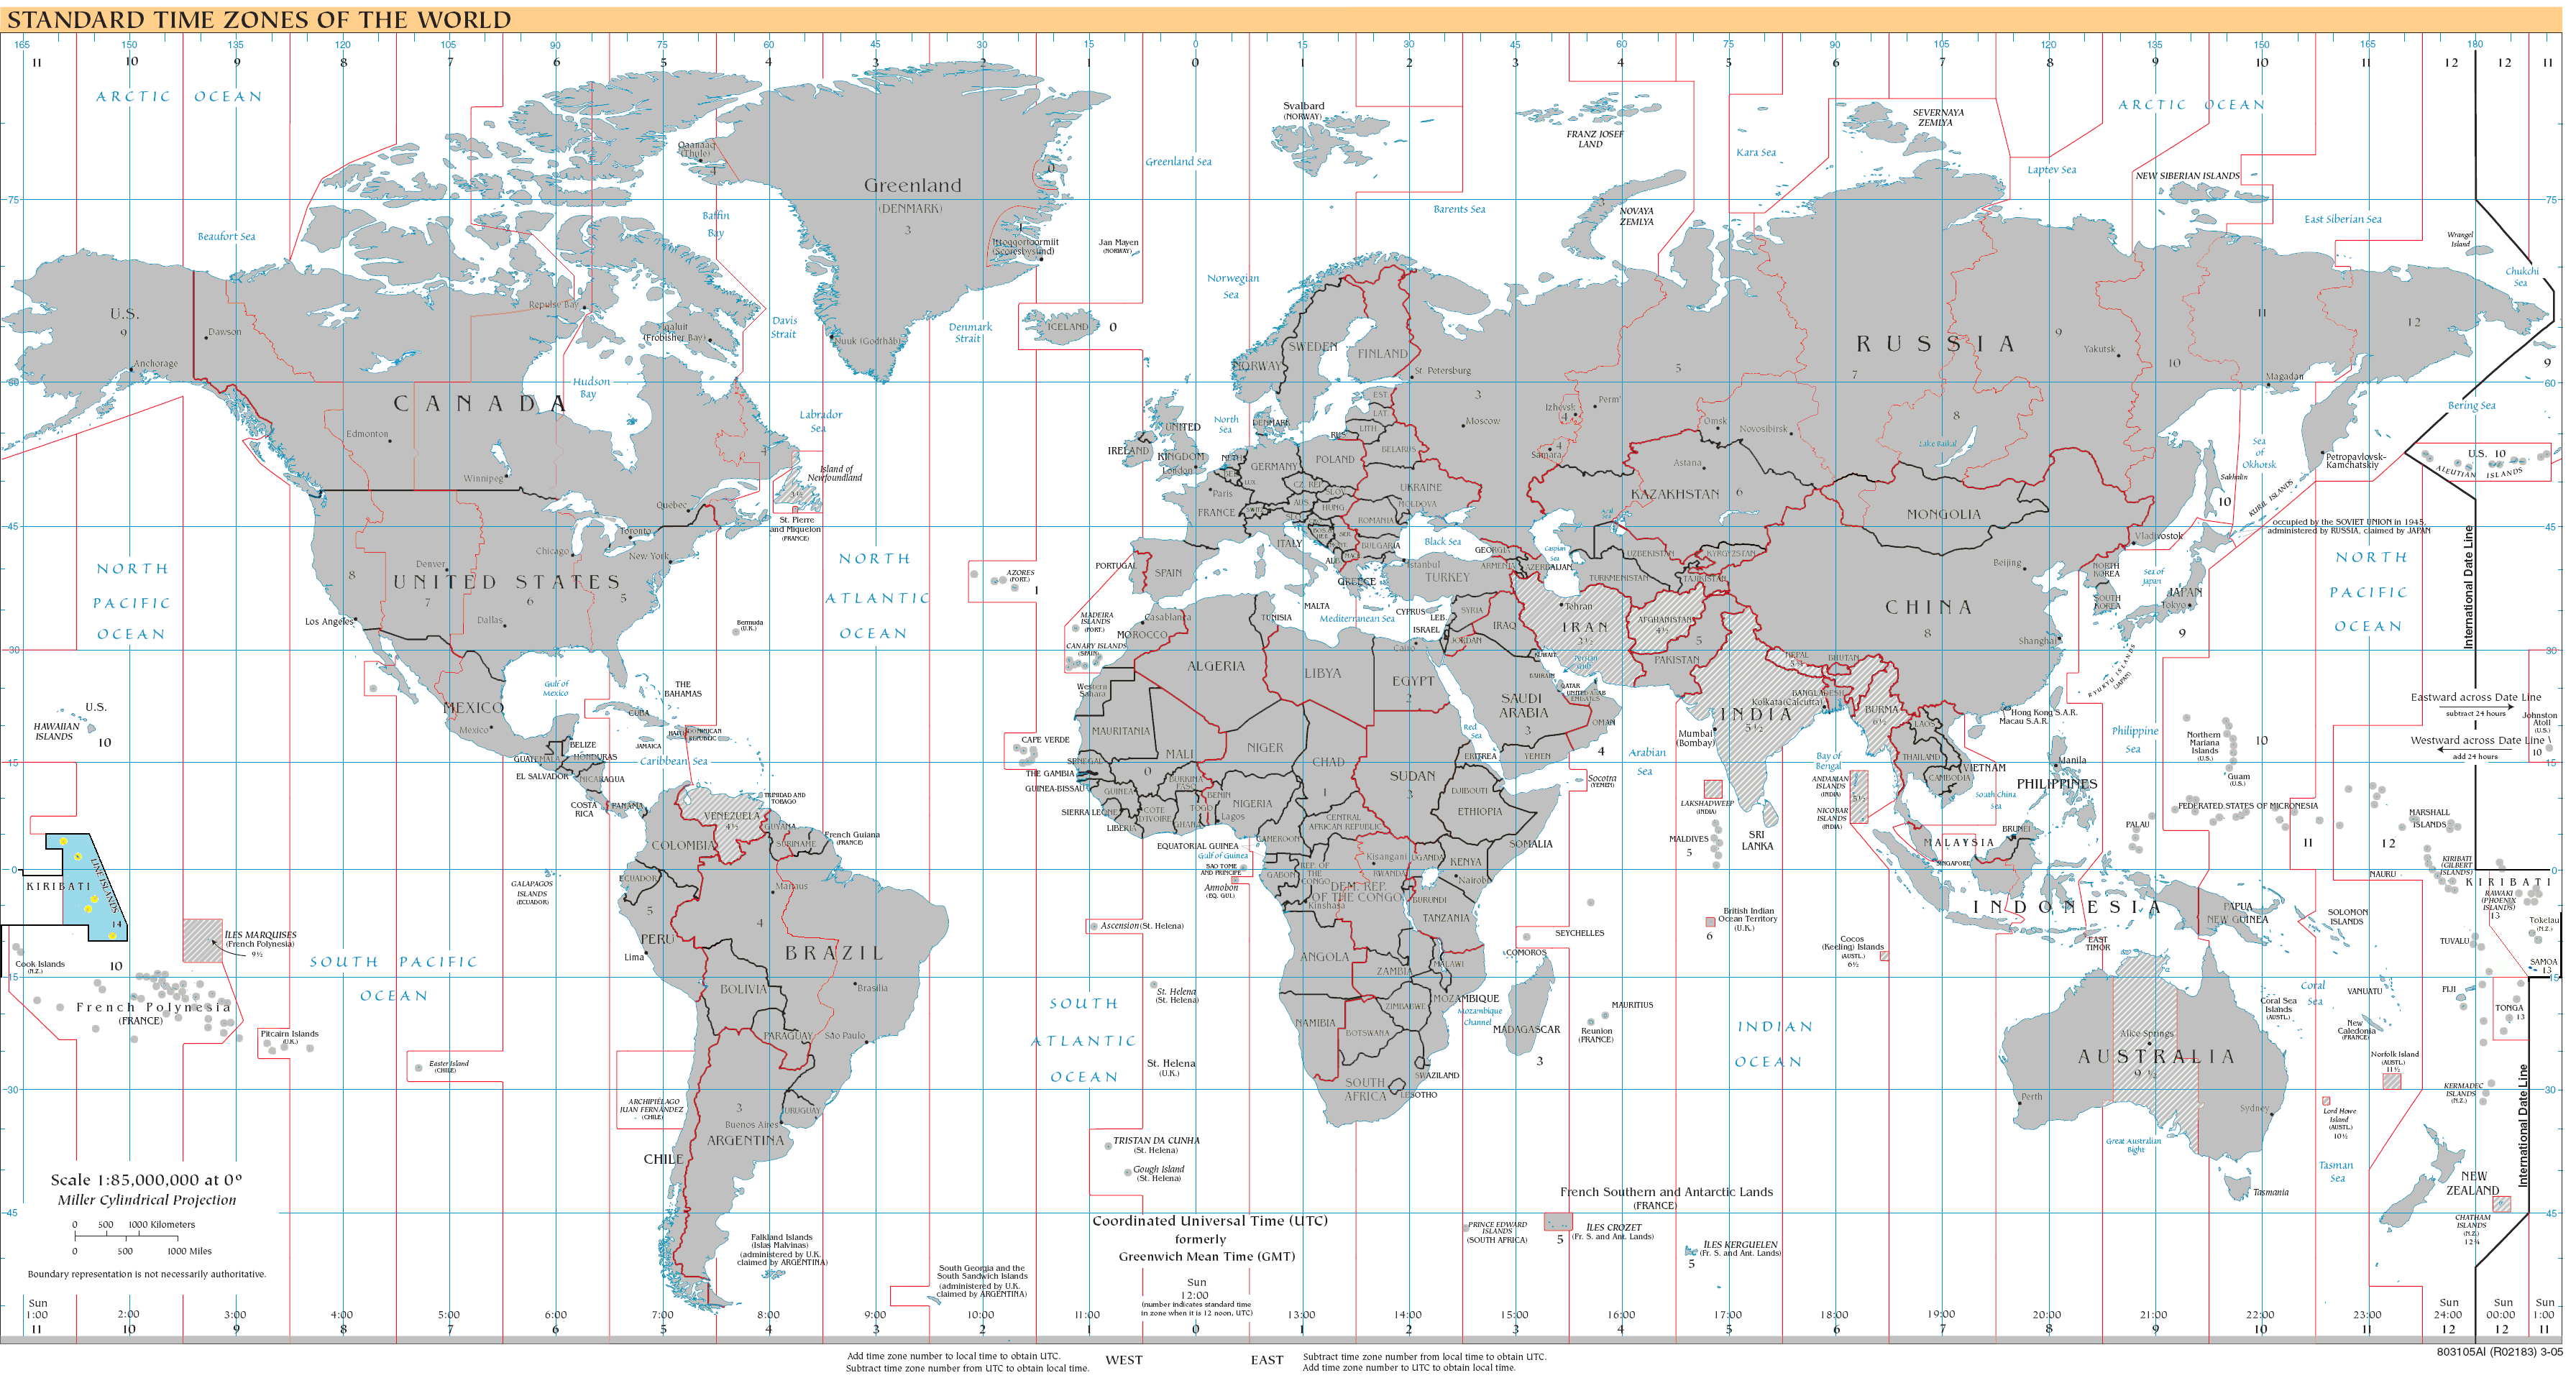 World Time Zones - wikipedia